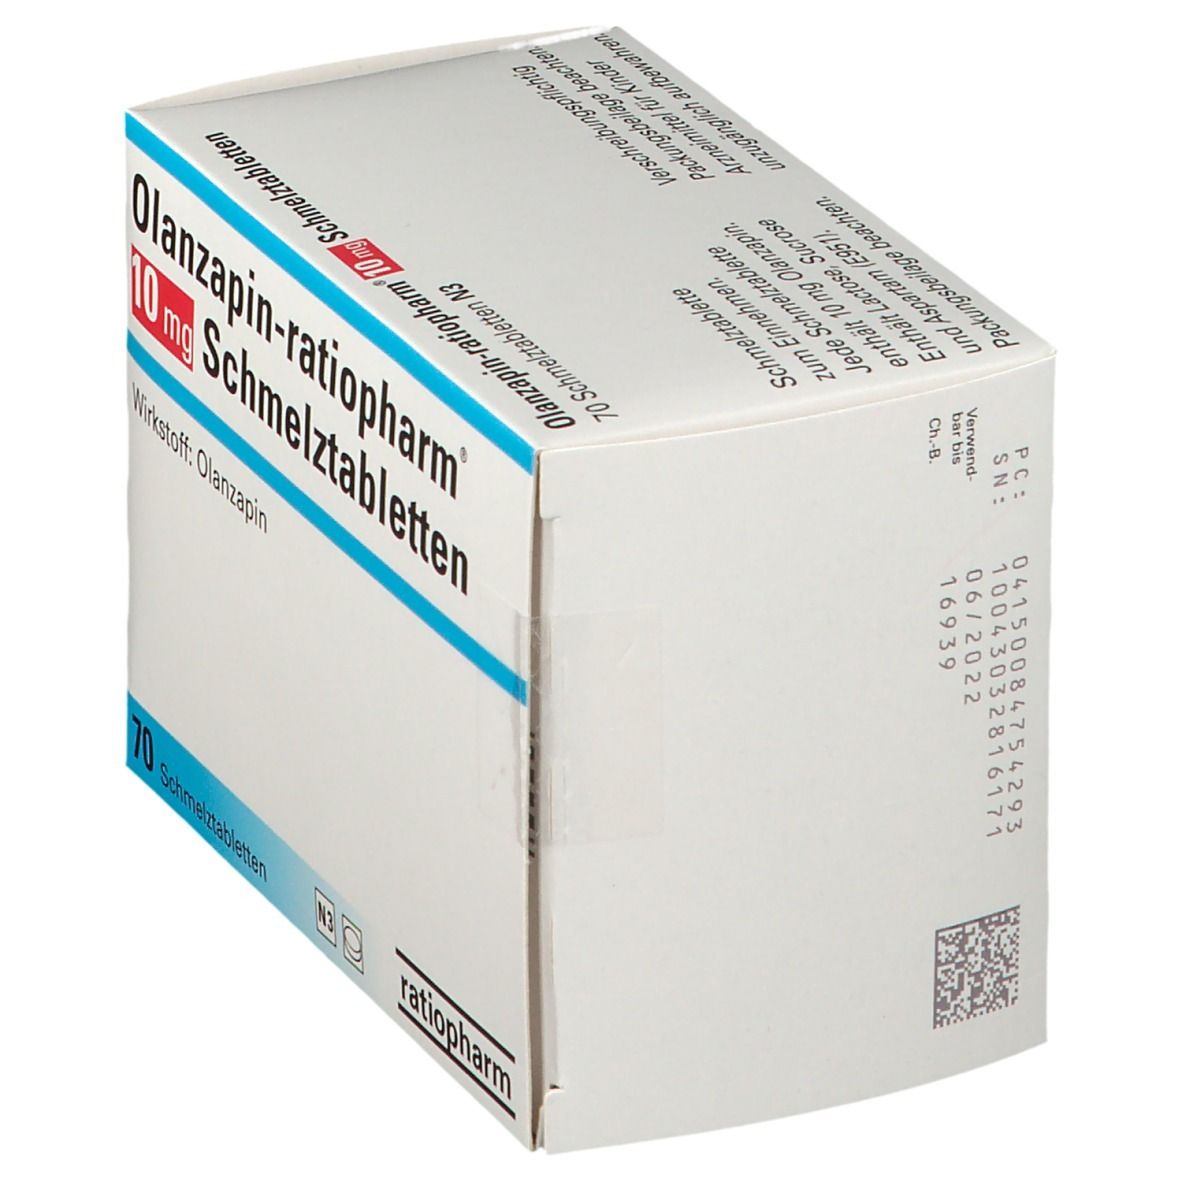 Olanzapin-ratiopharm® 10 mg